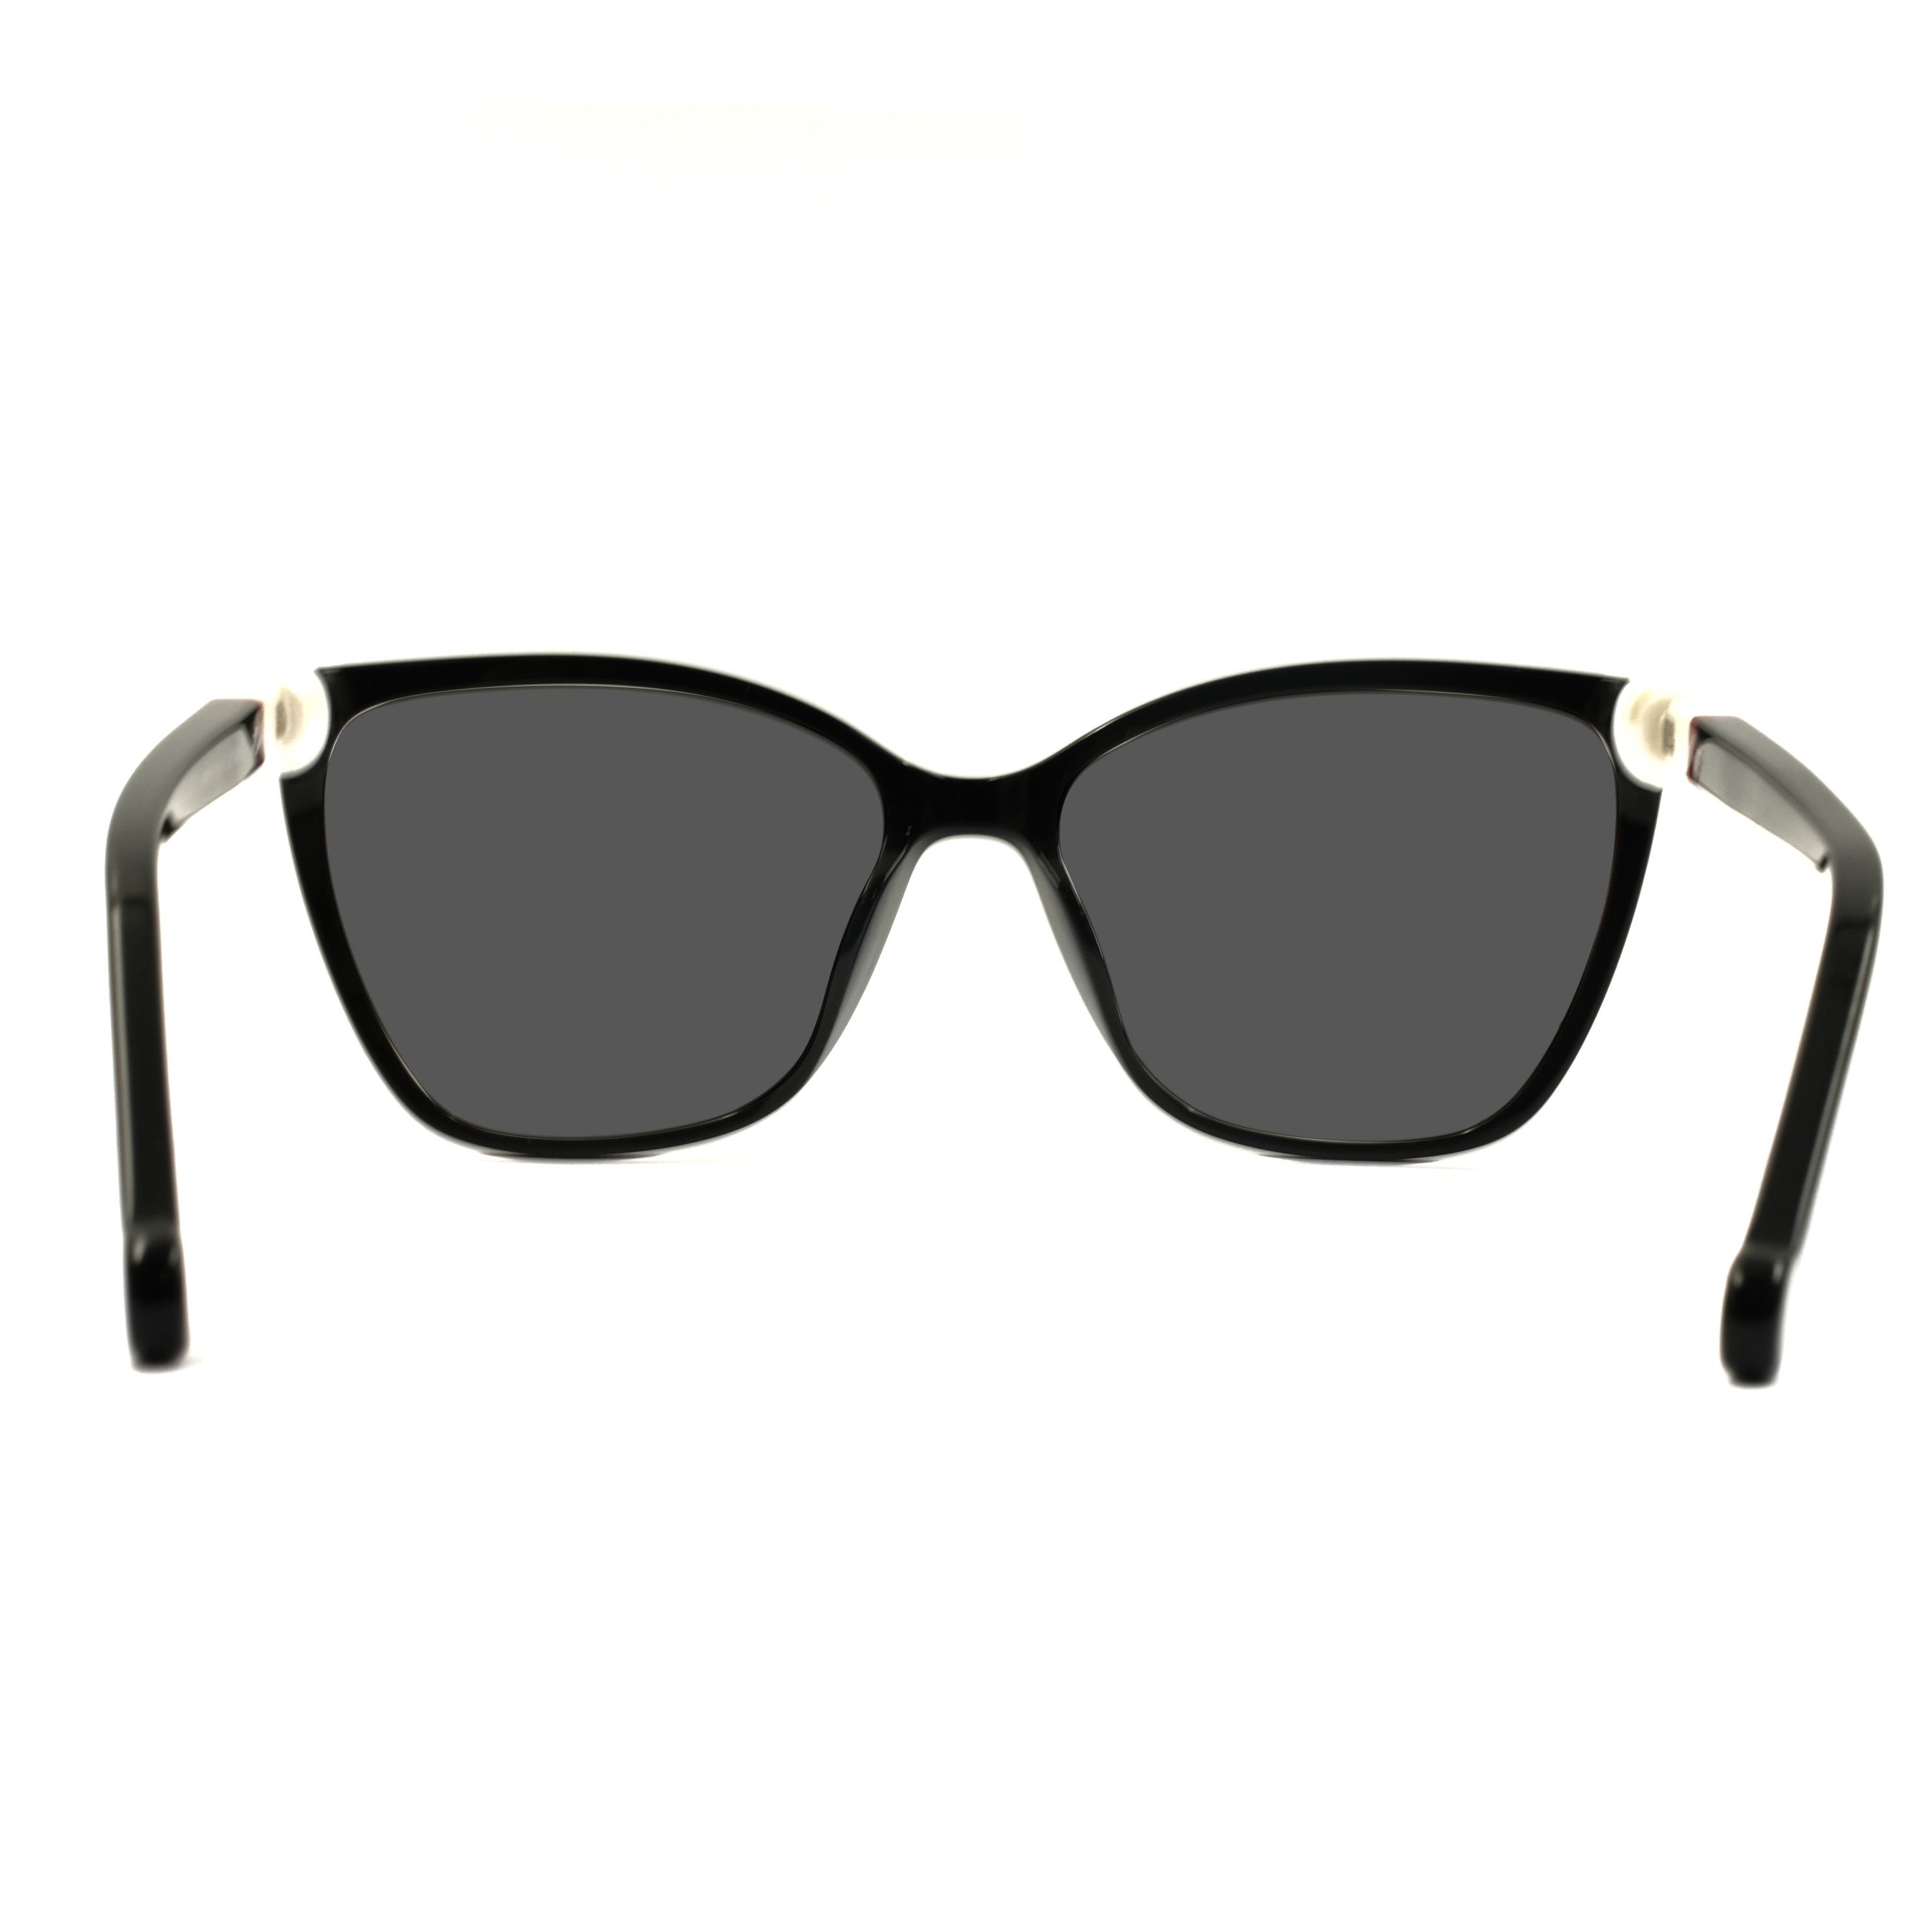 Build Your Own Sunglasses Company Spring Temple Black Acetate White Strip Sunglasses Classic Luxury Sun Glasses